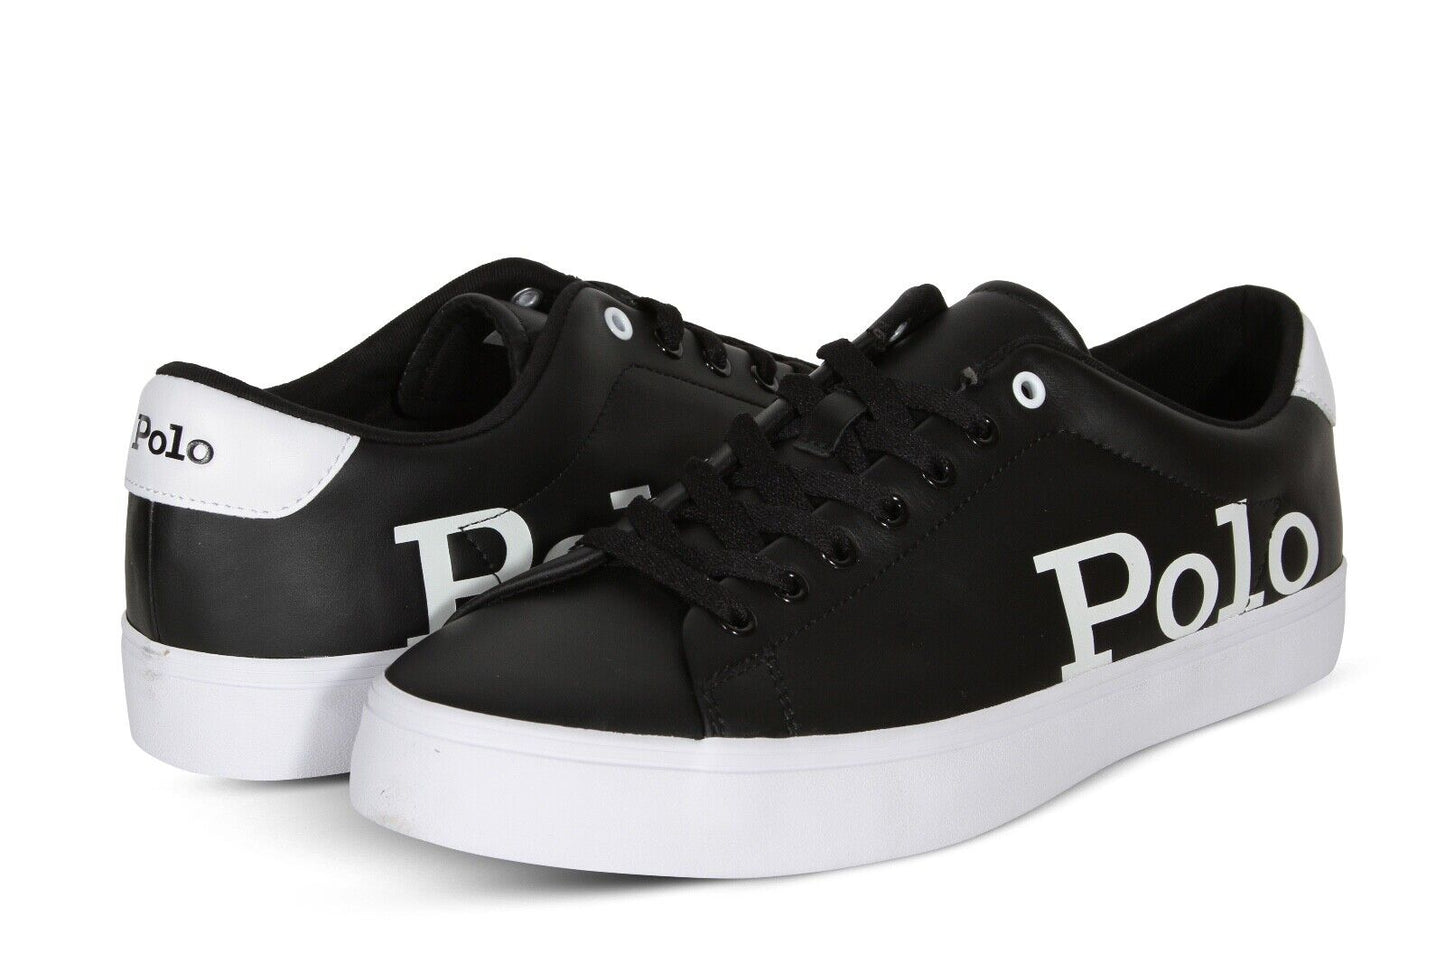 Polo Ralph Lauren Longwood Logo Men’s Sneakers in Black and White 816862547002